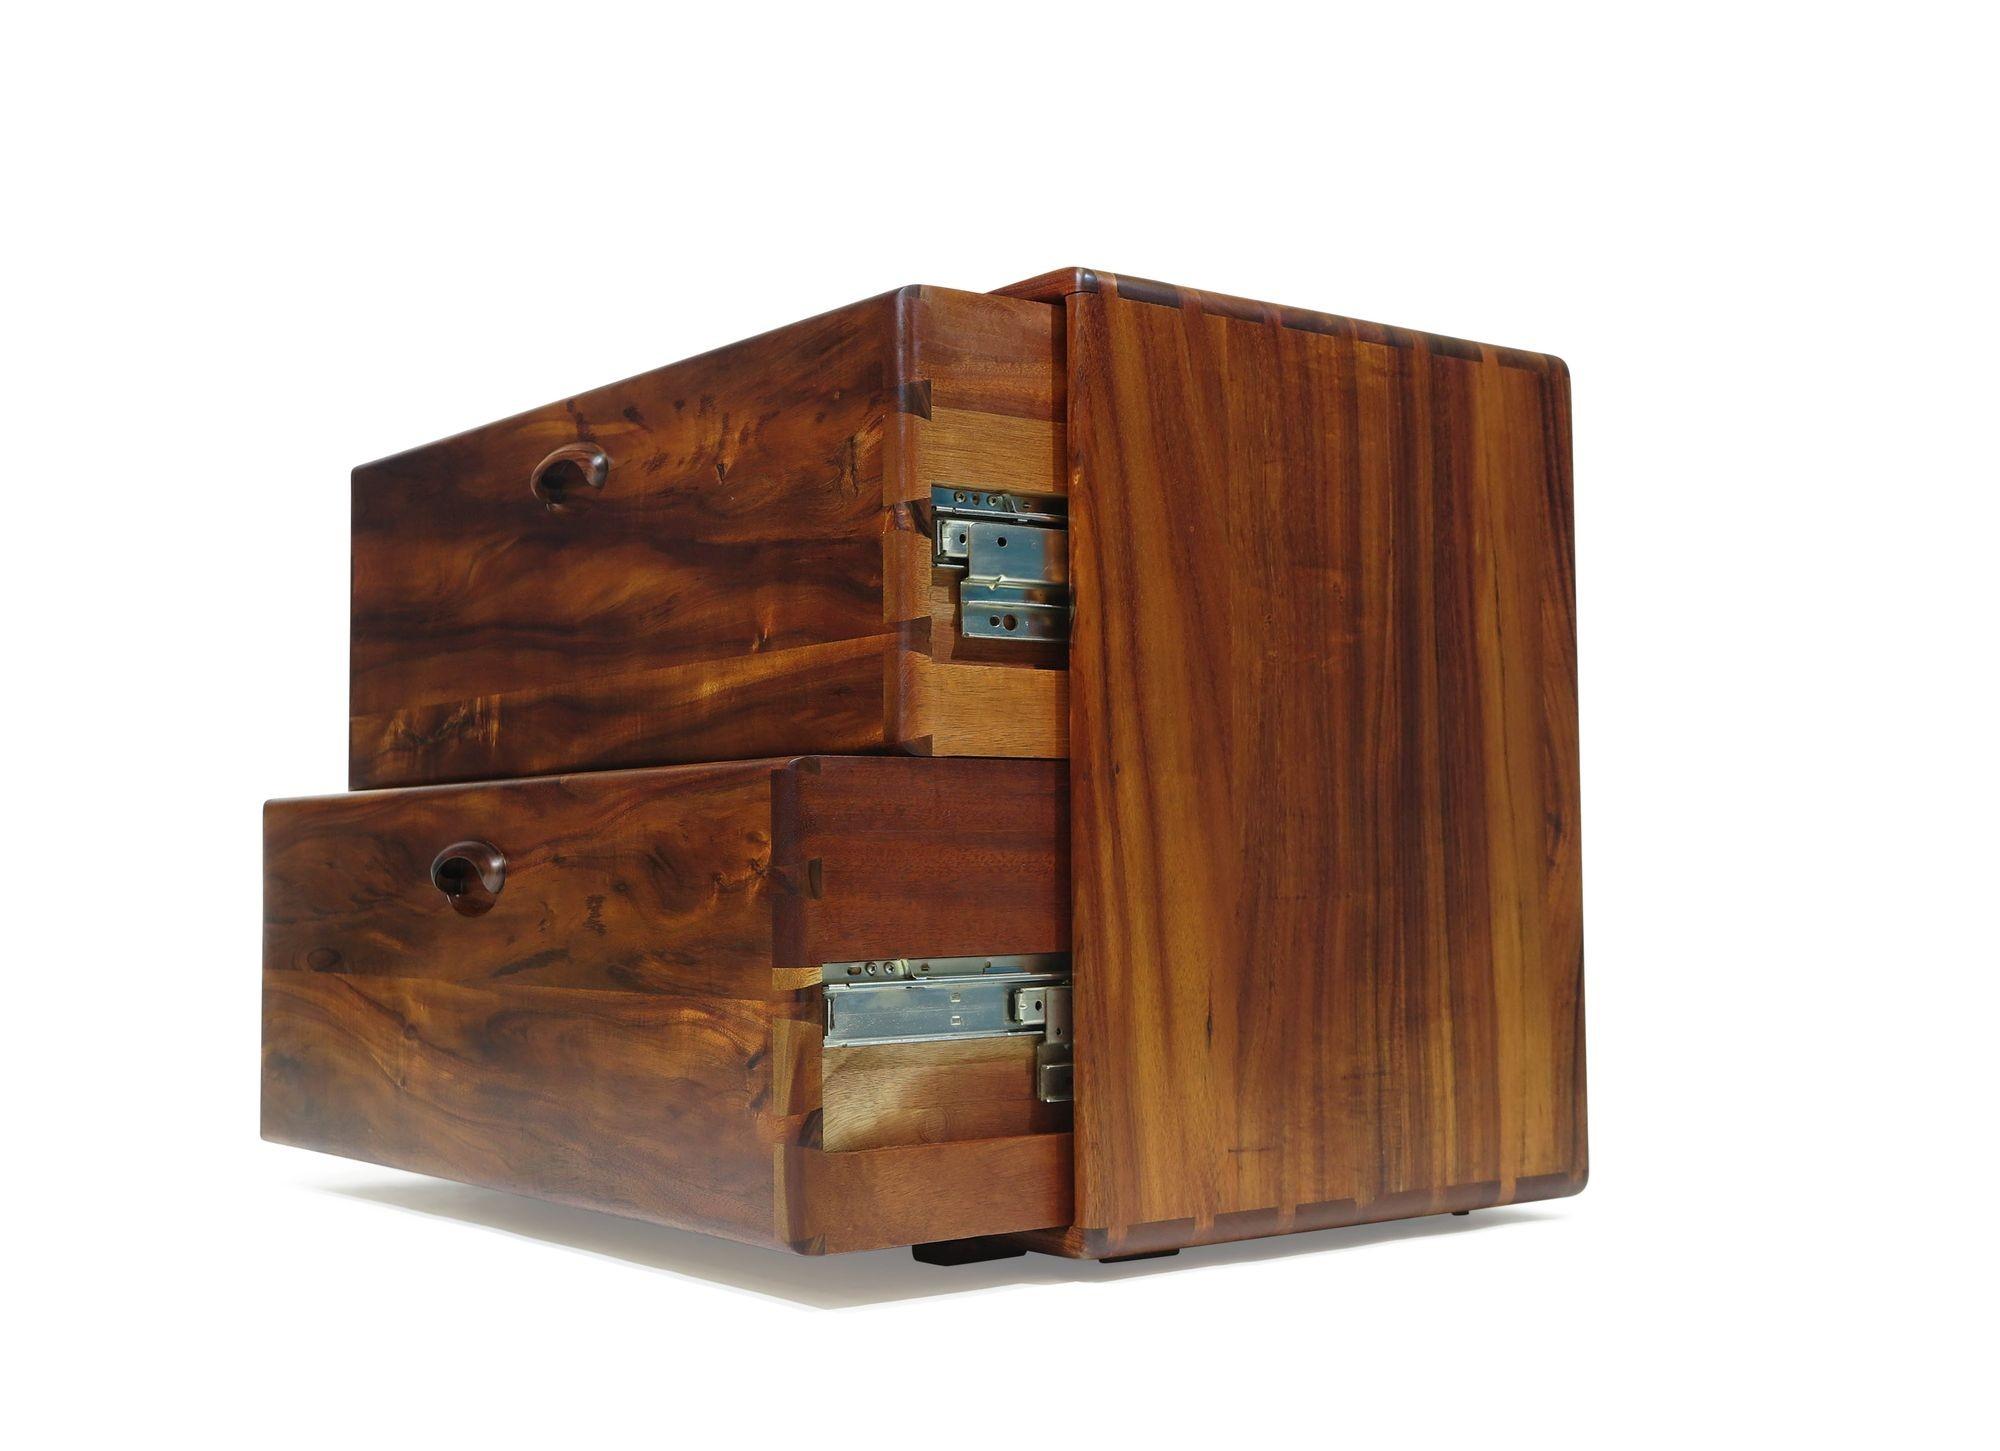 Oiled Koa California Studio Craft Filing Cabinet #1 For Sale